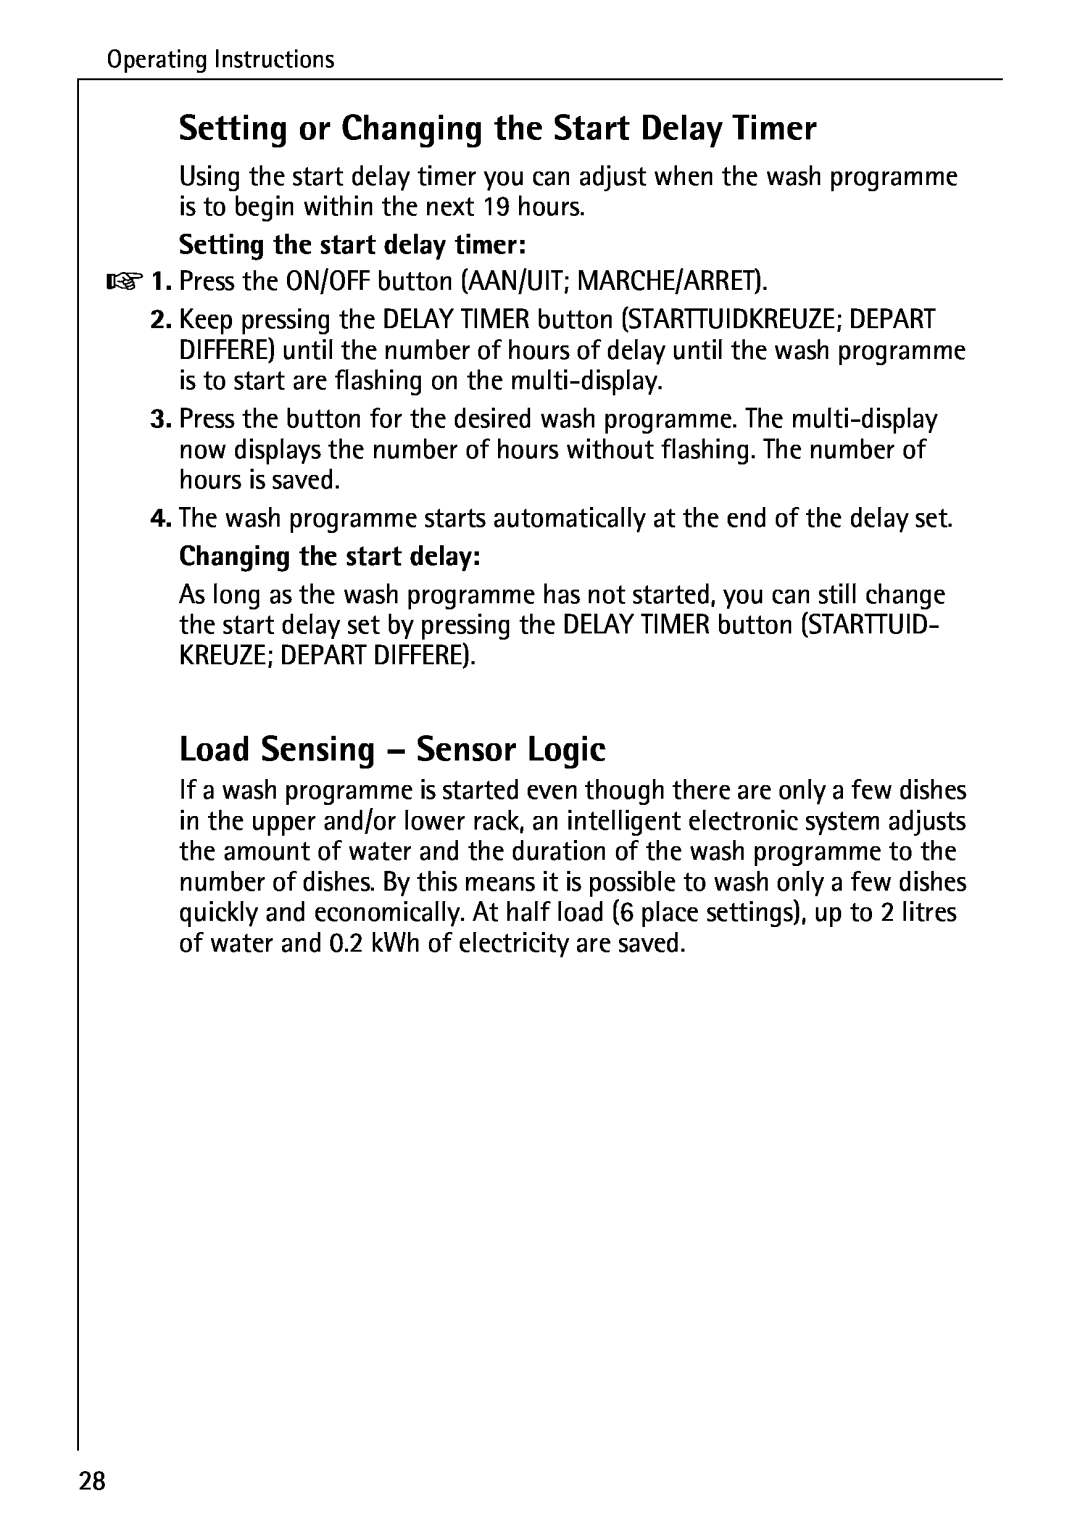 AEG 80800 manual Setting or Changing the Start Delay Timer, Load Sensing - Sensor Logic, Setting the start delay timer 